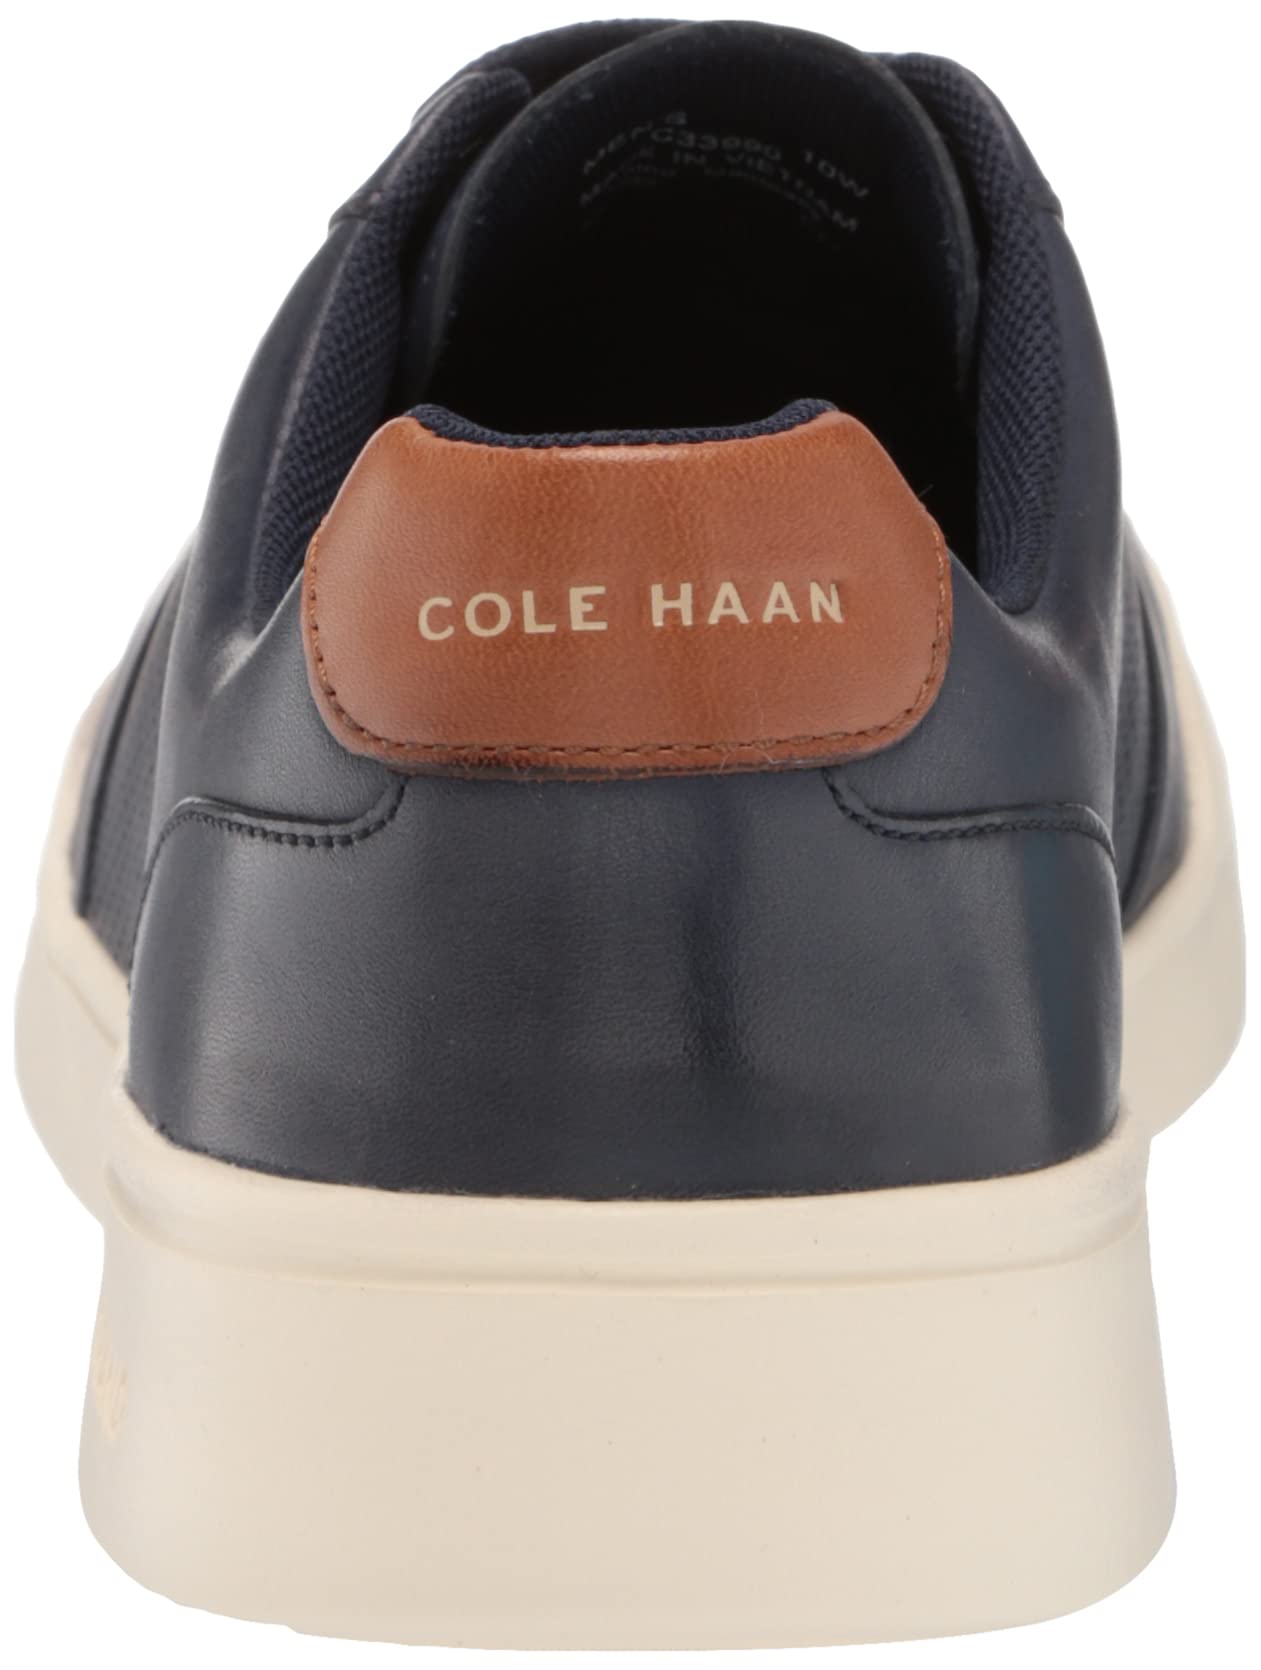 Cole Haan Men's Crosscourt Modern Sneaker